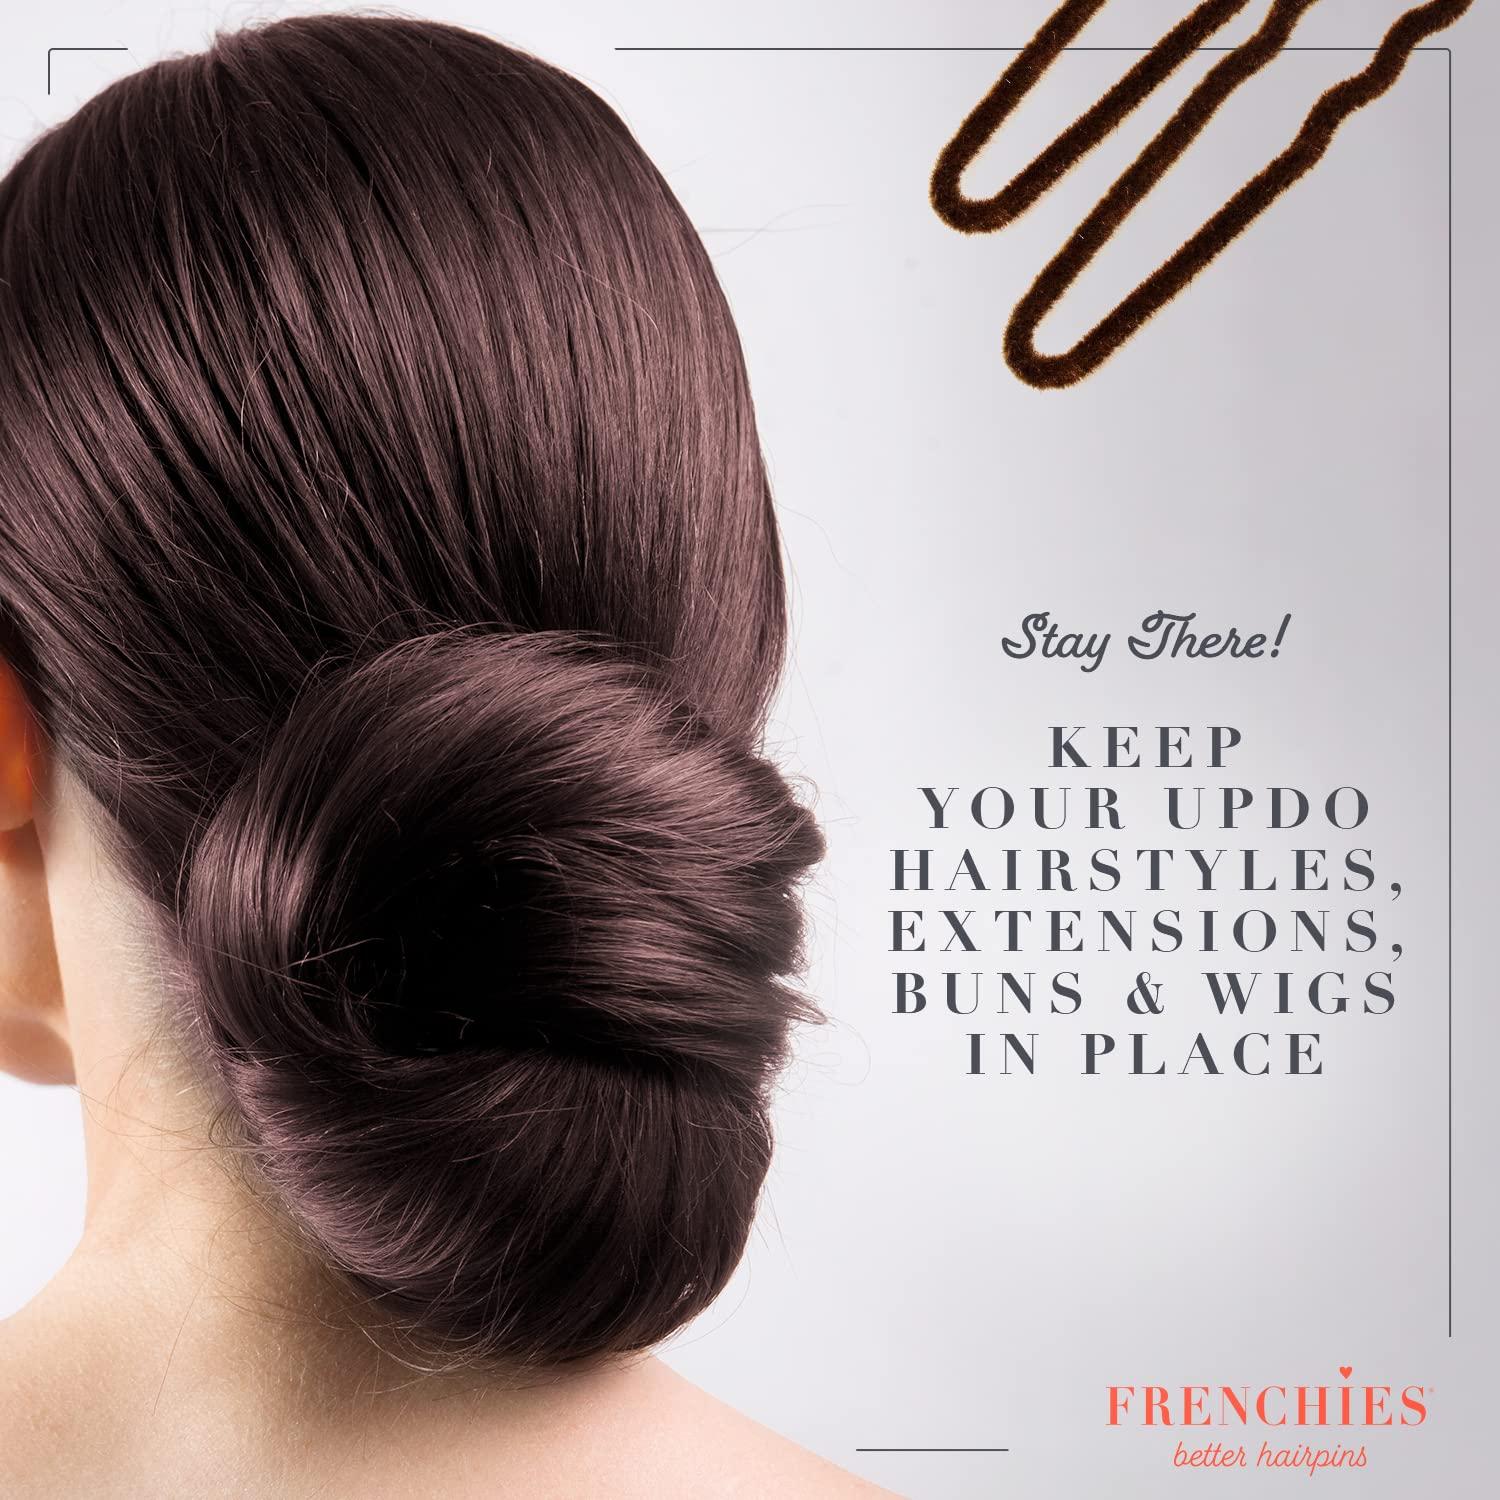 French braids | Jenni's hairdays | Page 2